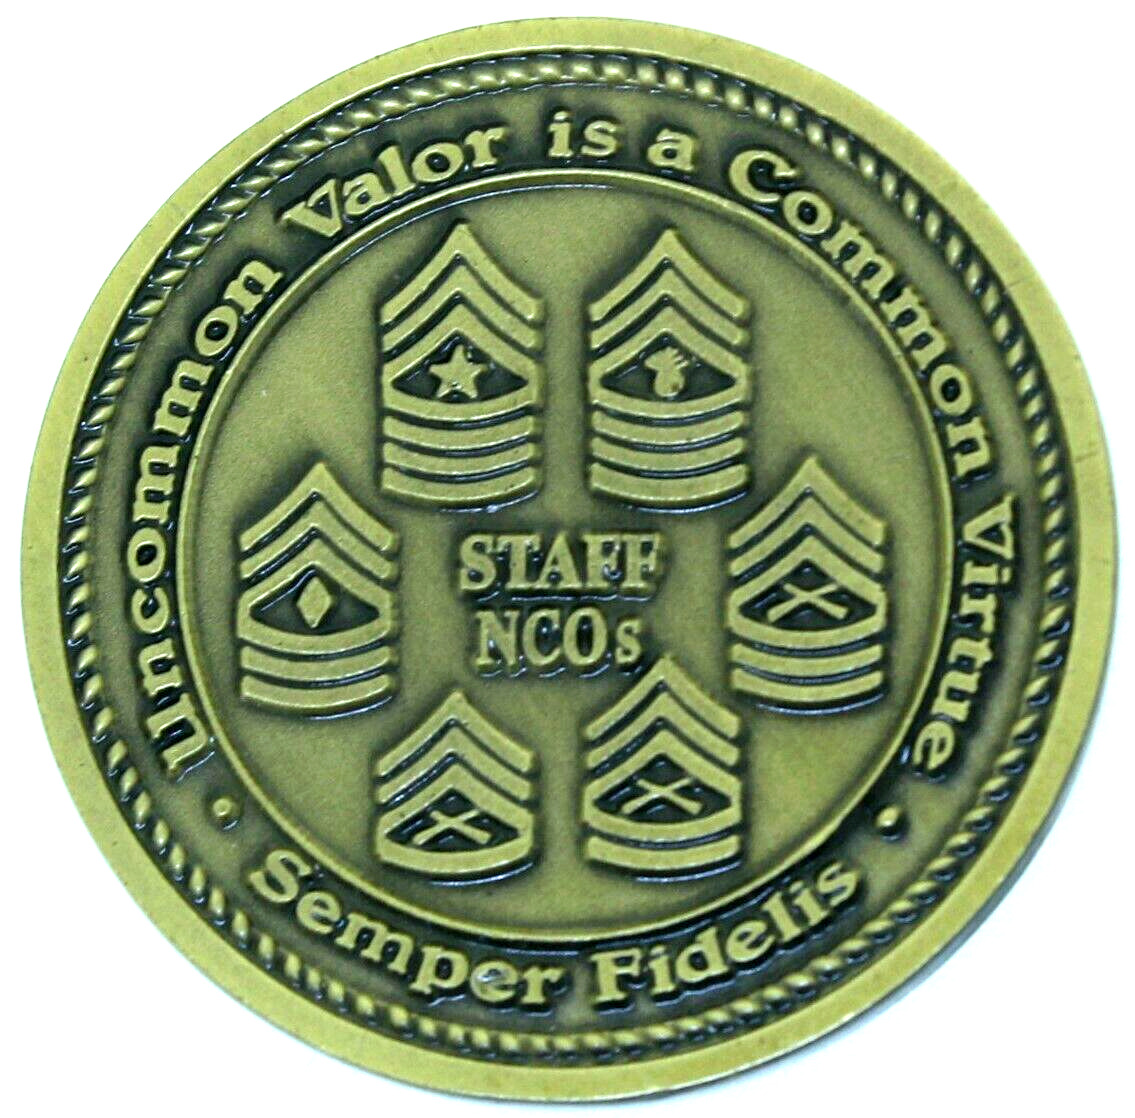 USMC Staff NCO's Uncommon Valor Challenge Coin EF